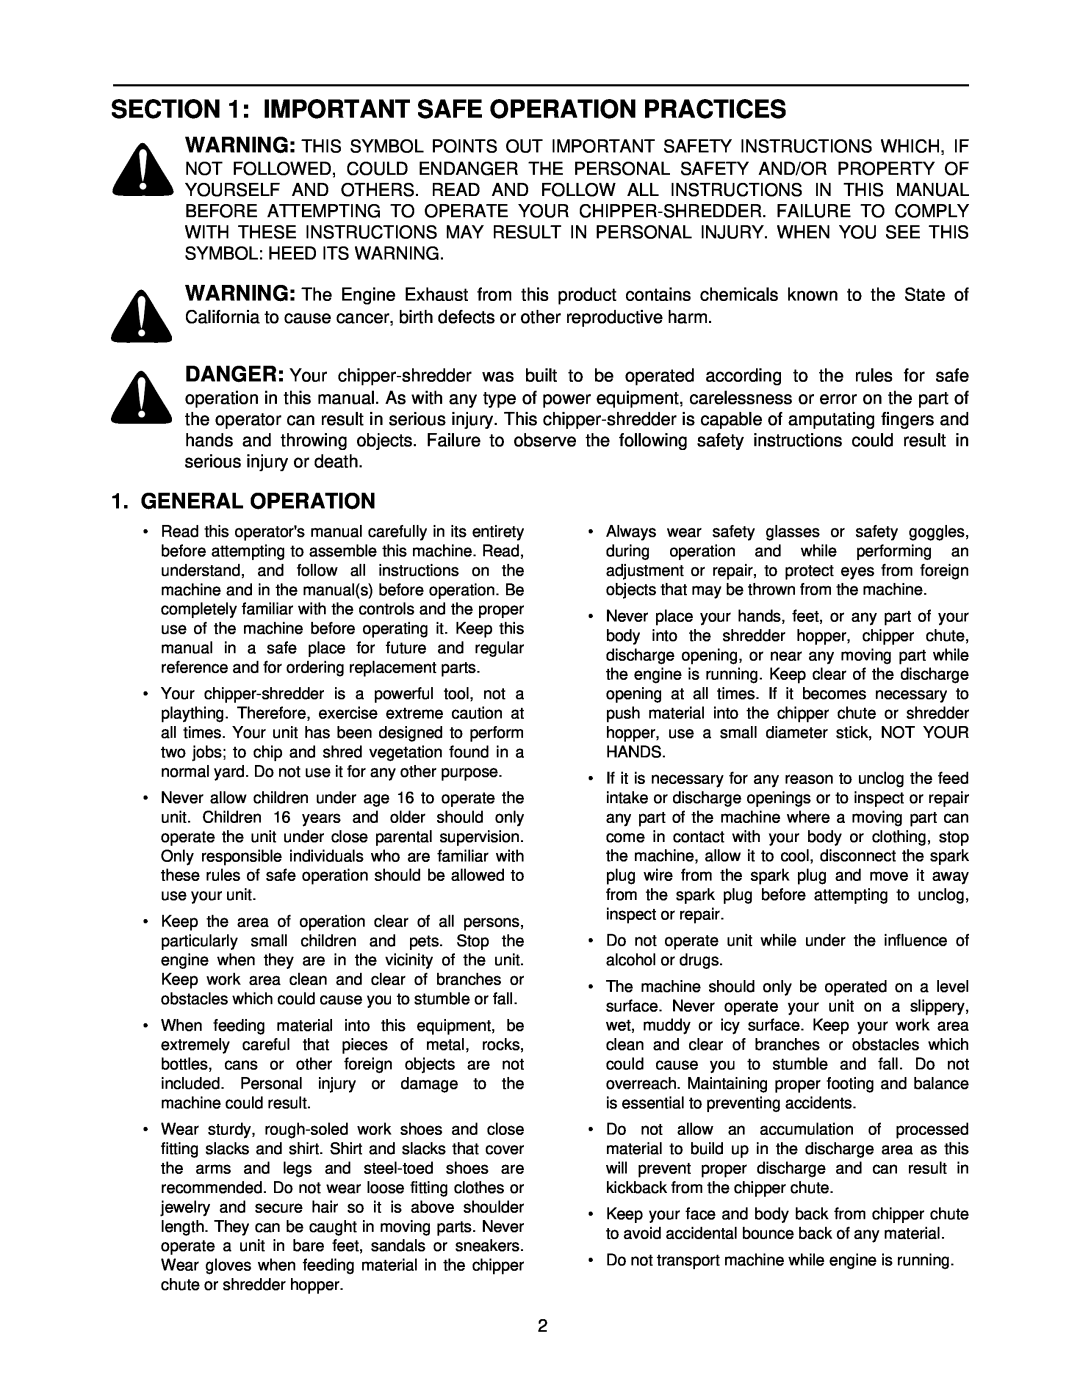 Bolens 462 Thru 465 manual Important Safe Operation Practices, General Operation 